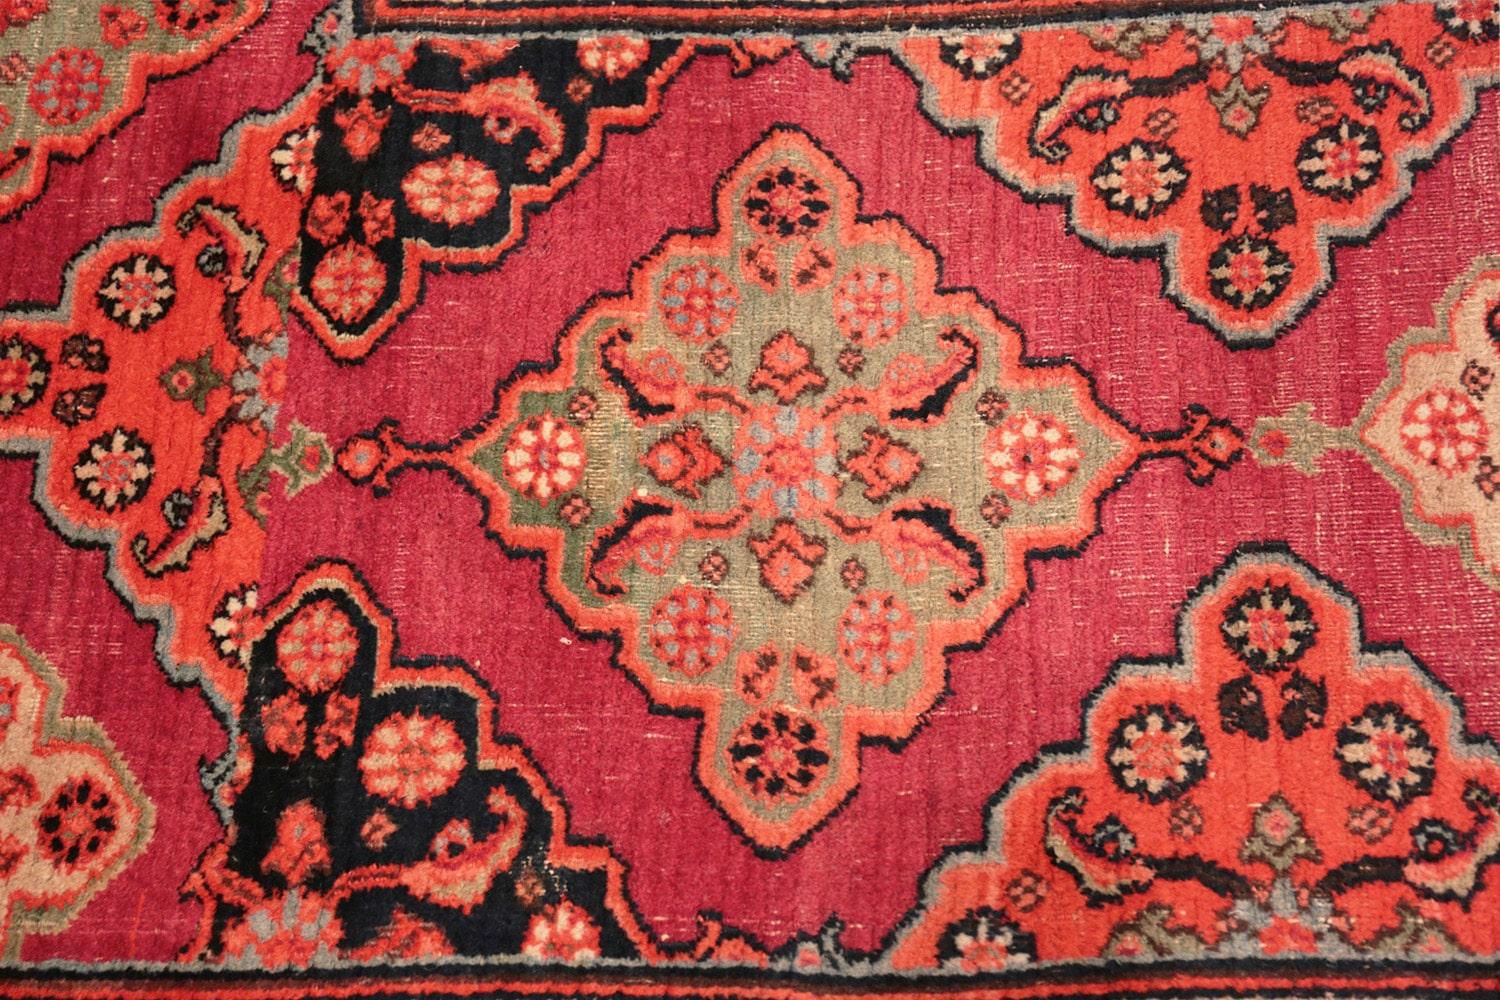 19th Century Antique Persian Khorassan Carpet. Size: 11' 9